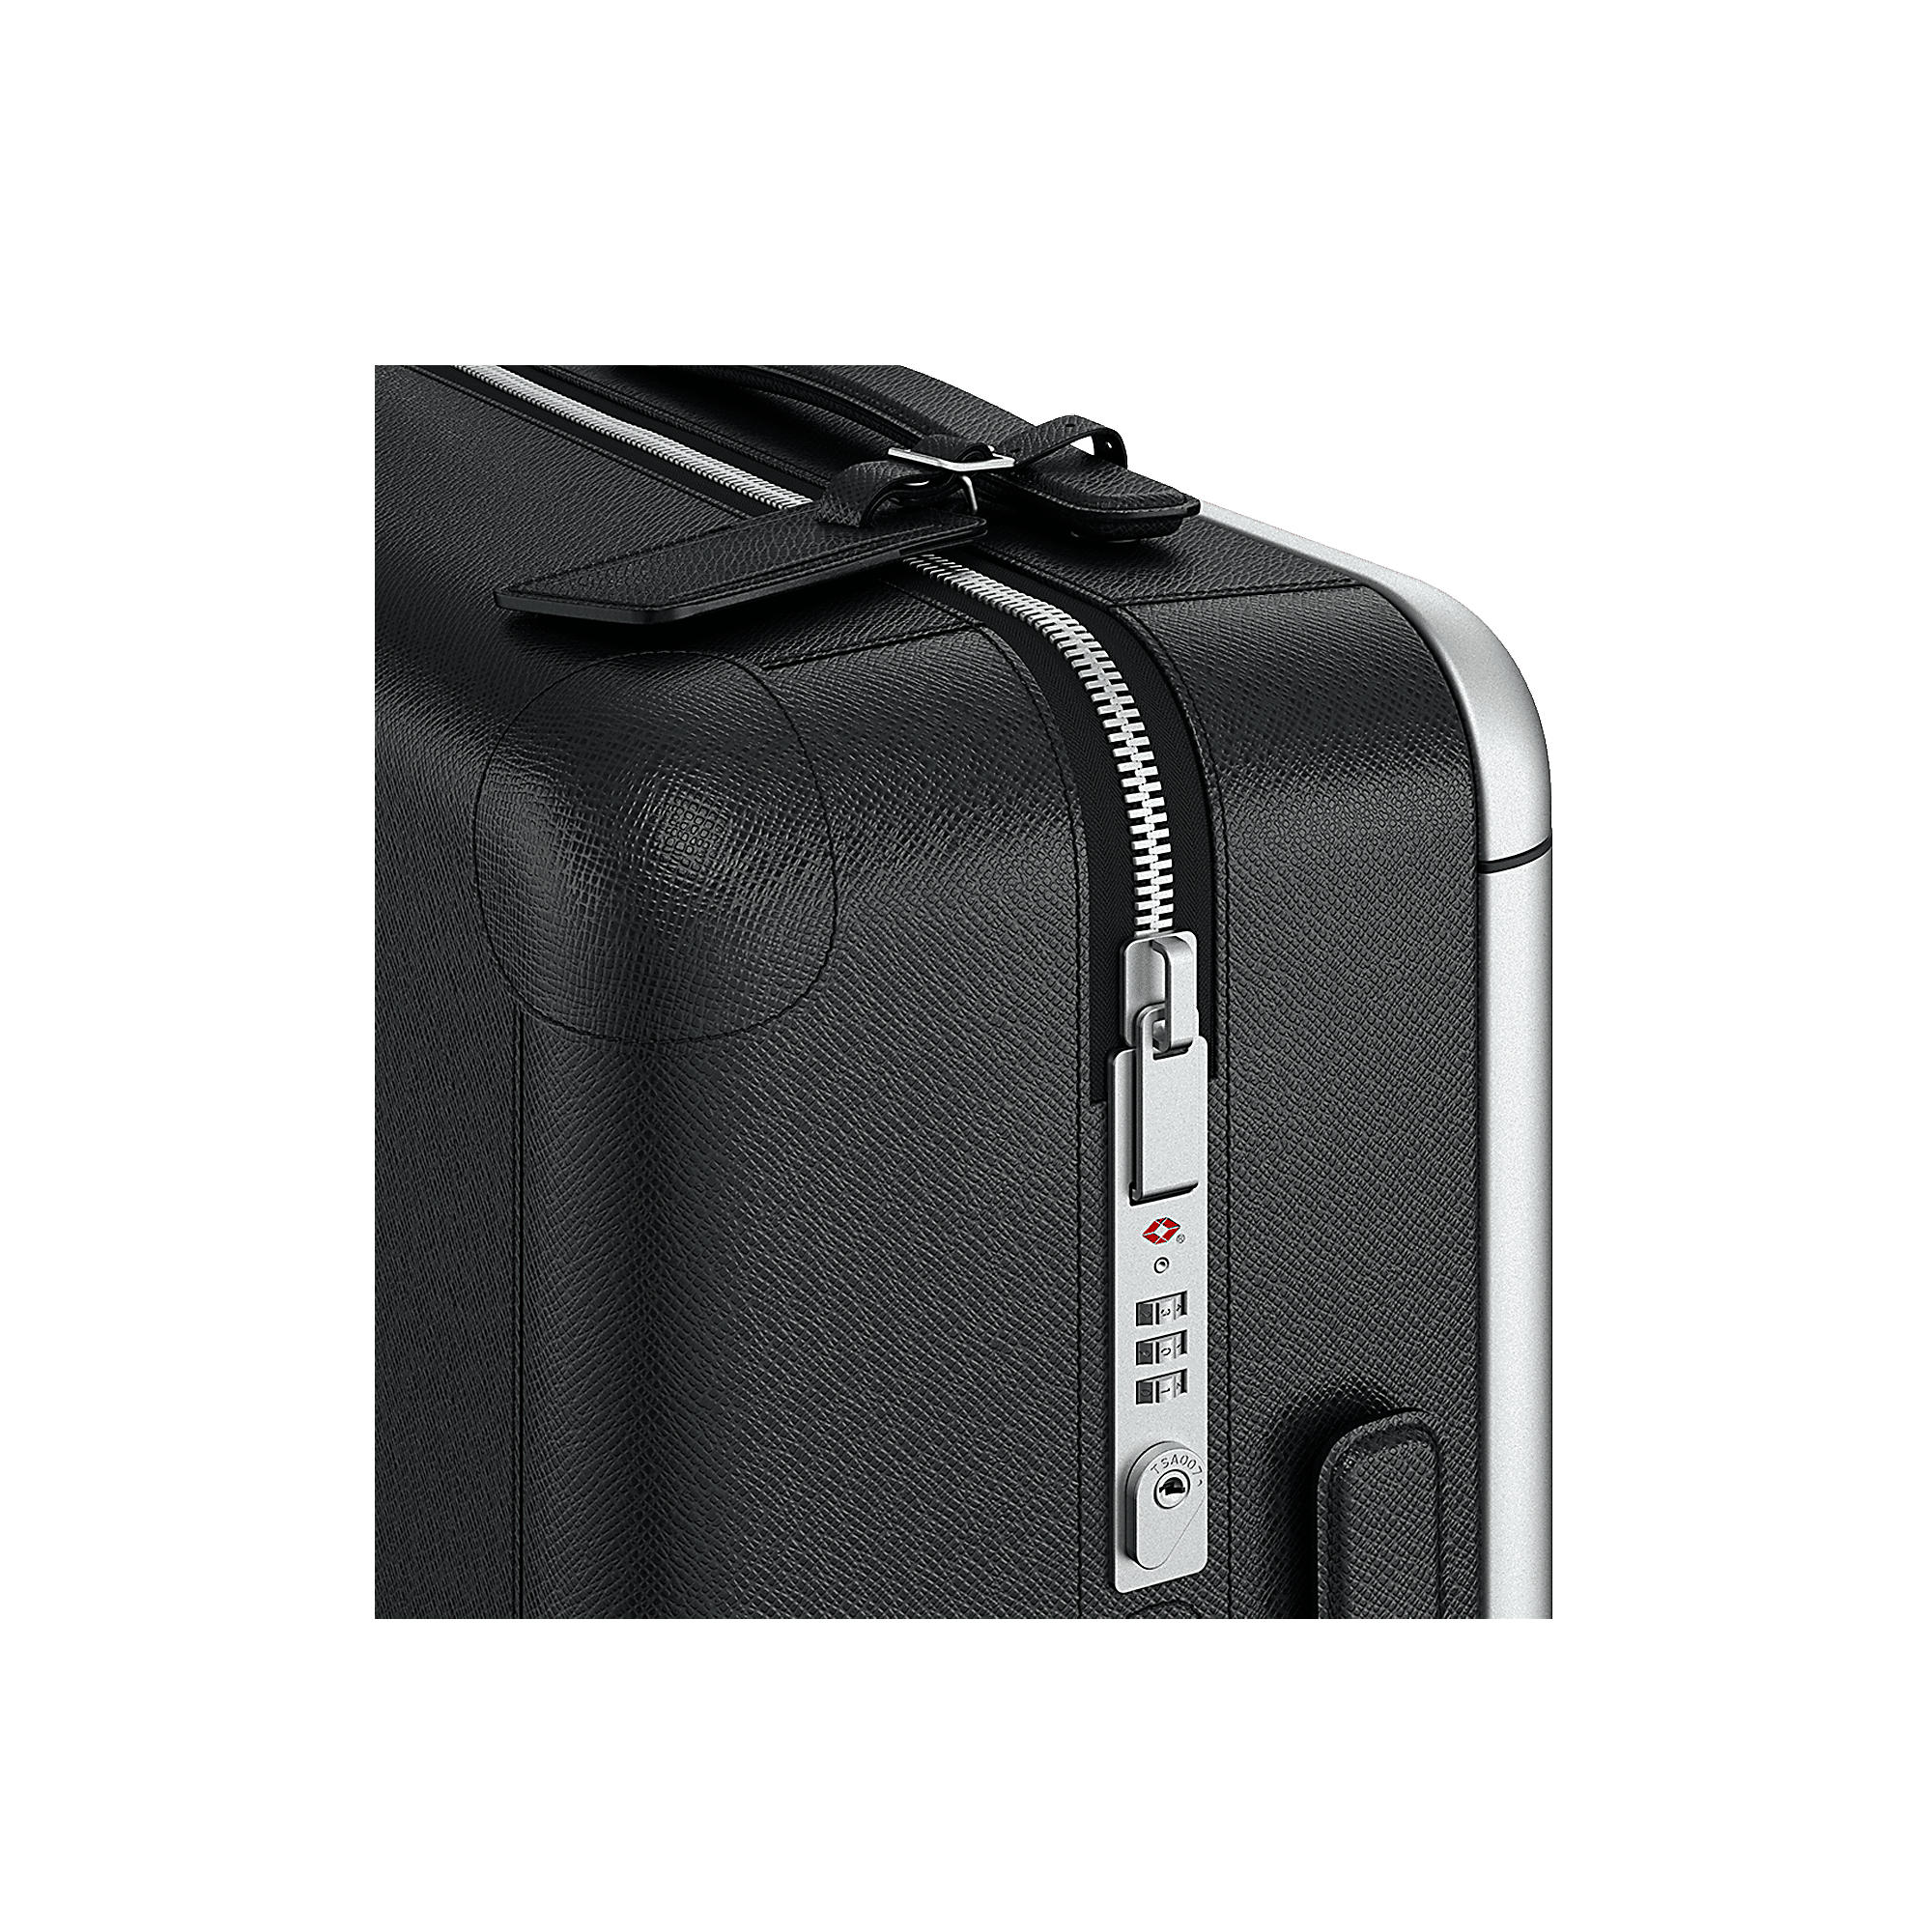 Replica Louis Vuitton Horizon 55 Rolling Luggage LV x NBA M20450 for Sale